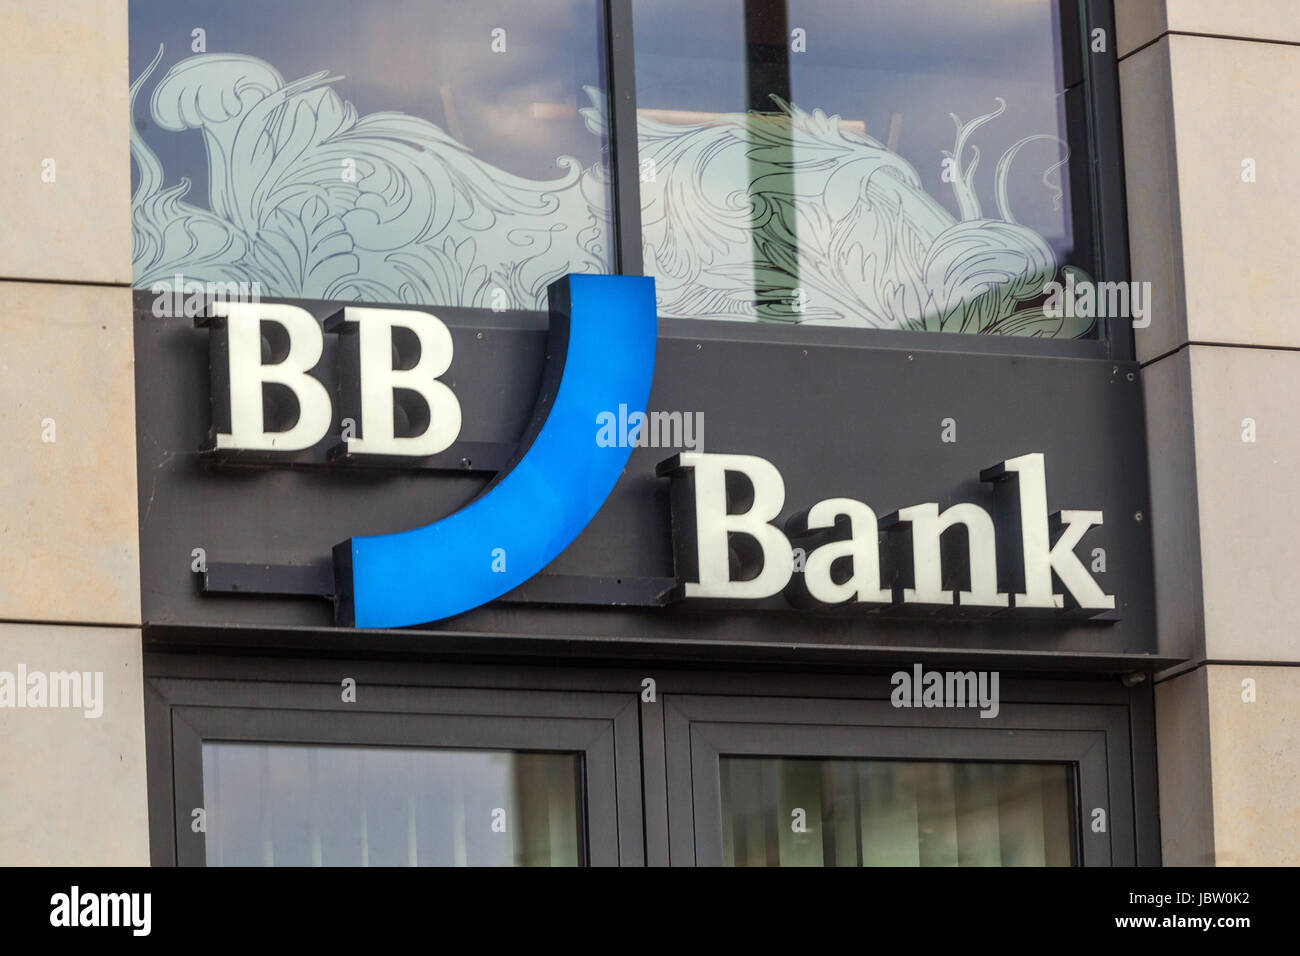 BB Bank, logo, sign, Germany Stock Photo